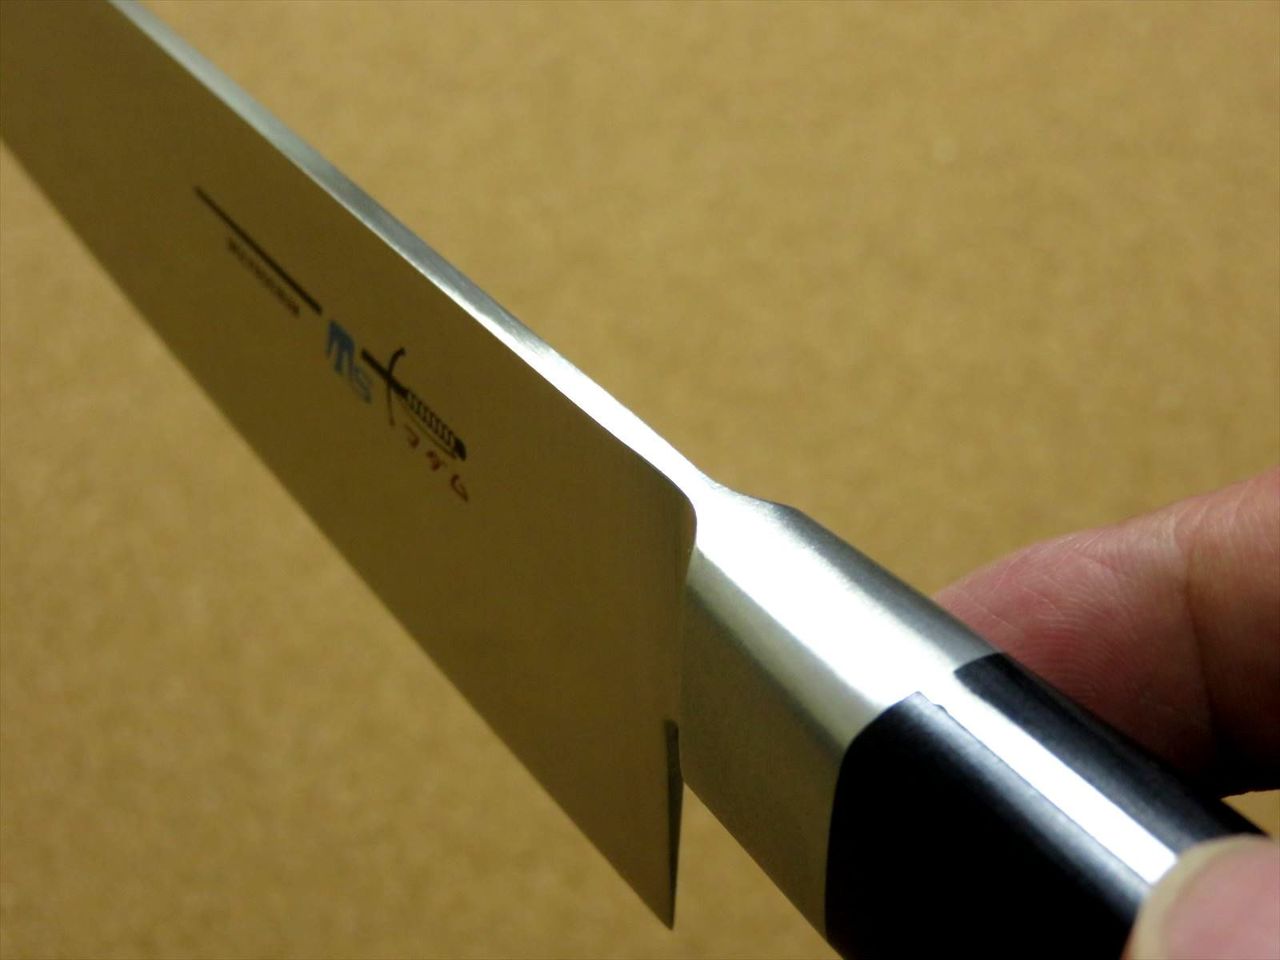 Japanese Kitchen Gyuto Chef's Knife 180mm 7.1 inch Meat Fish cutting SEKI JAPAN